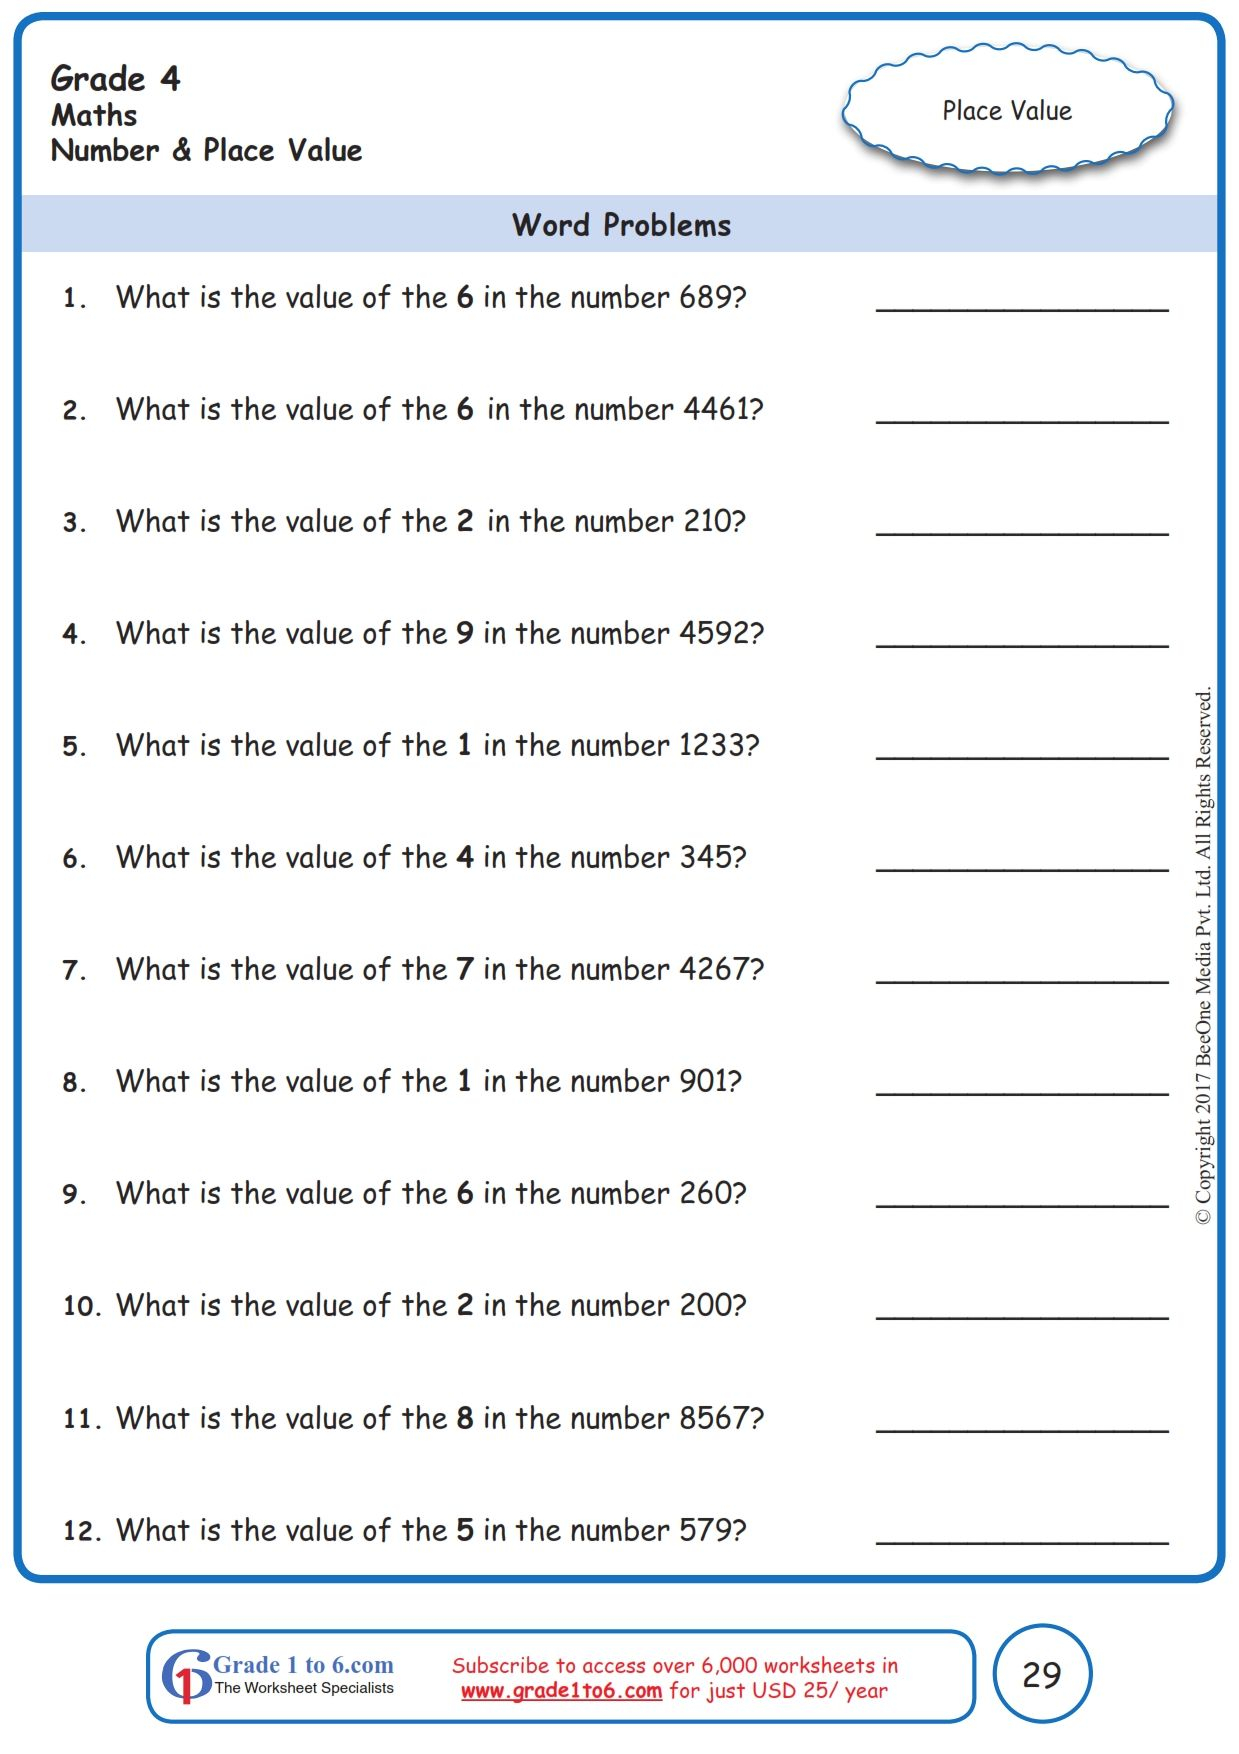 Worksheet Grade 4 Math Word Problems In 2020 Free Math Worksheets